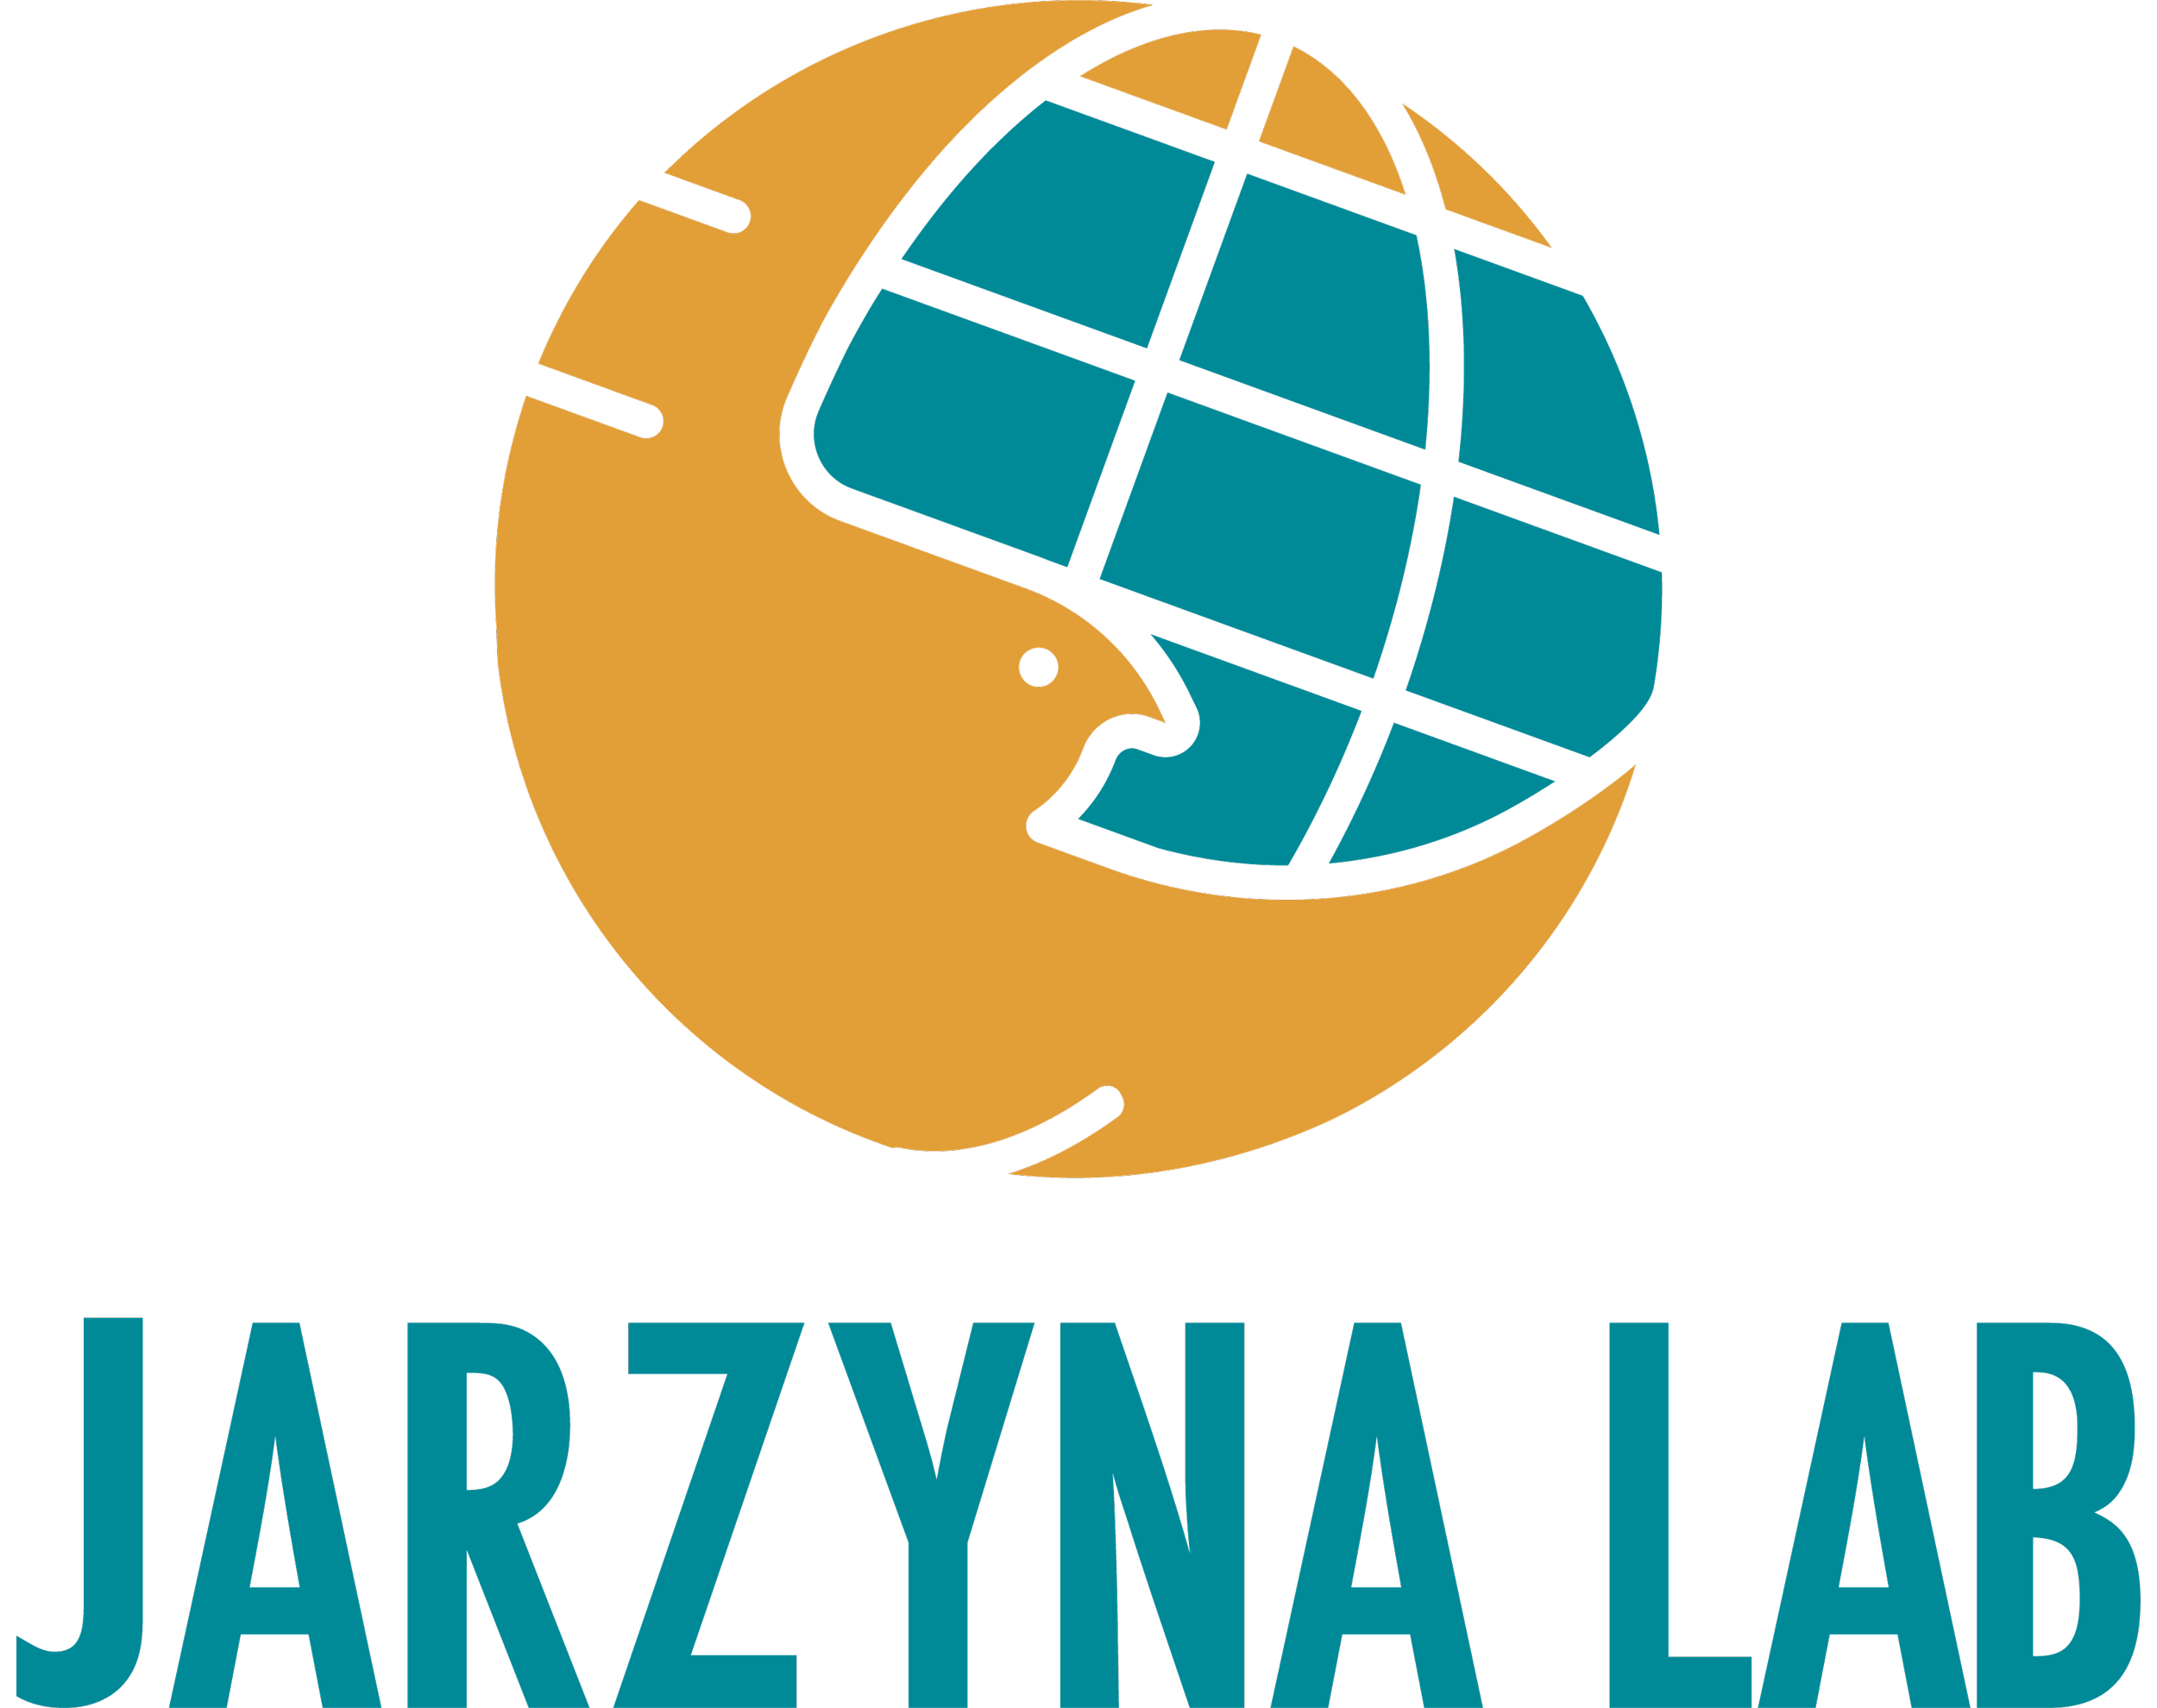 JarzynaLab-Logo_Vertical-Color.png